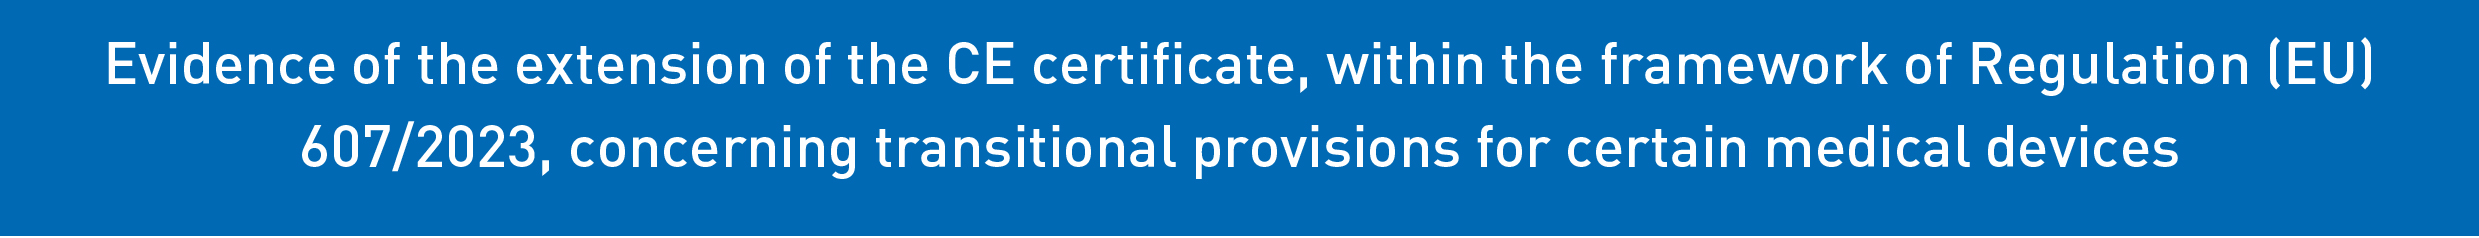 CE Certificate extension